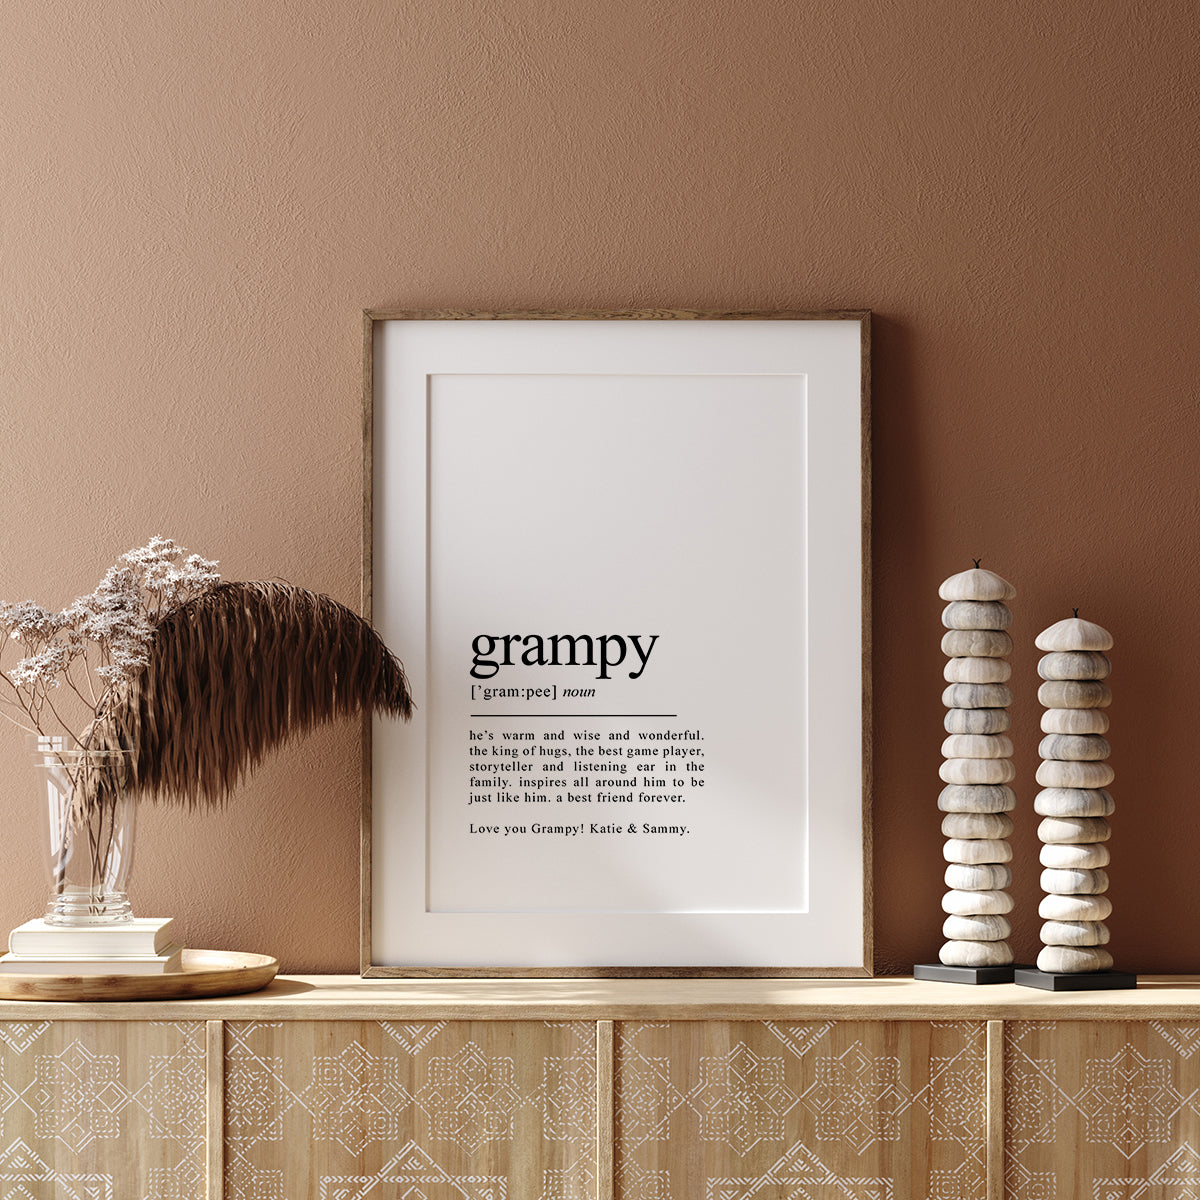 grampy definition print, grandad gift